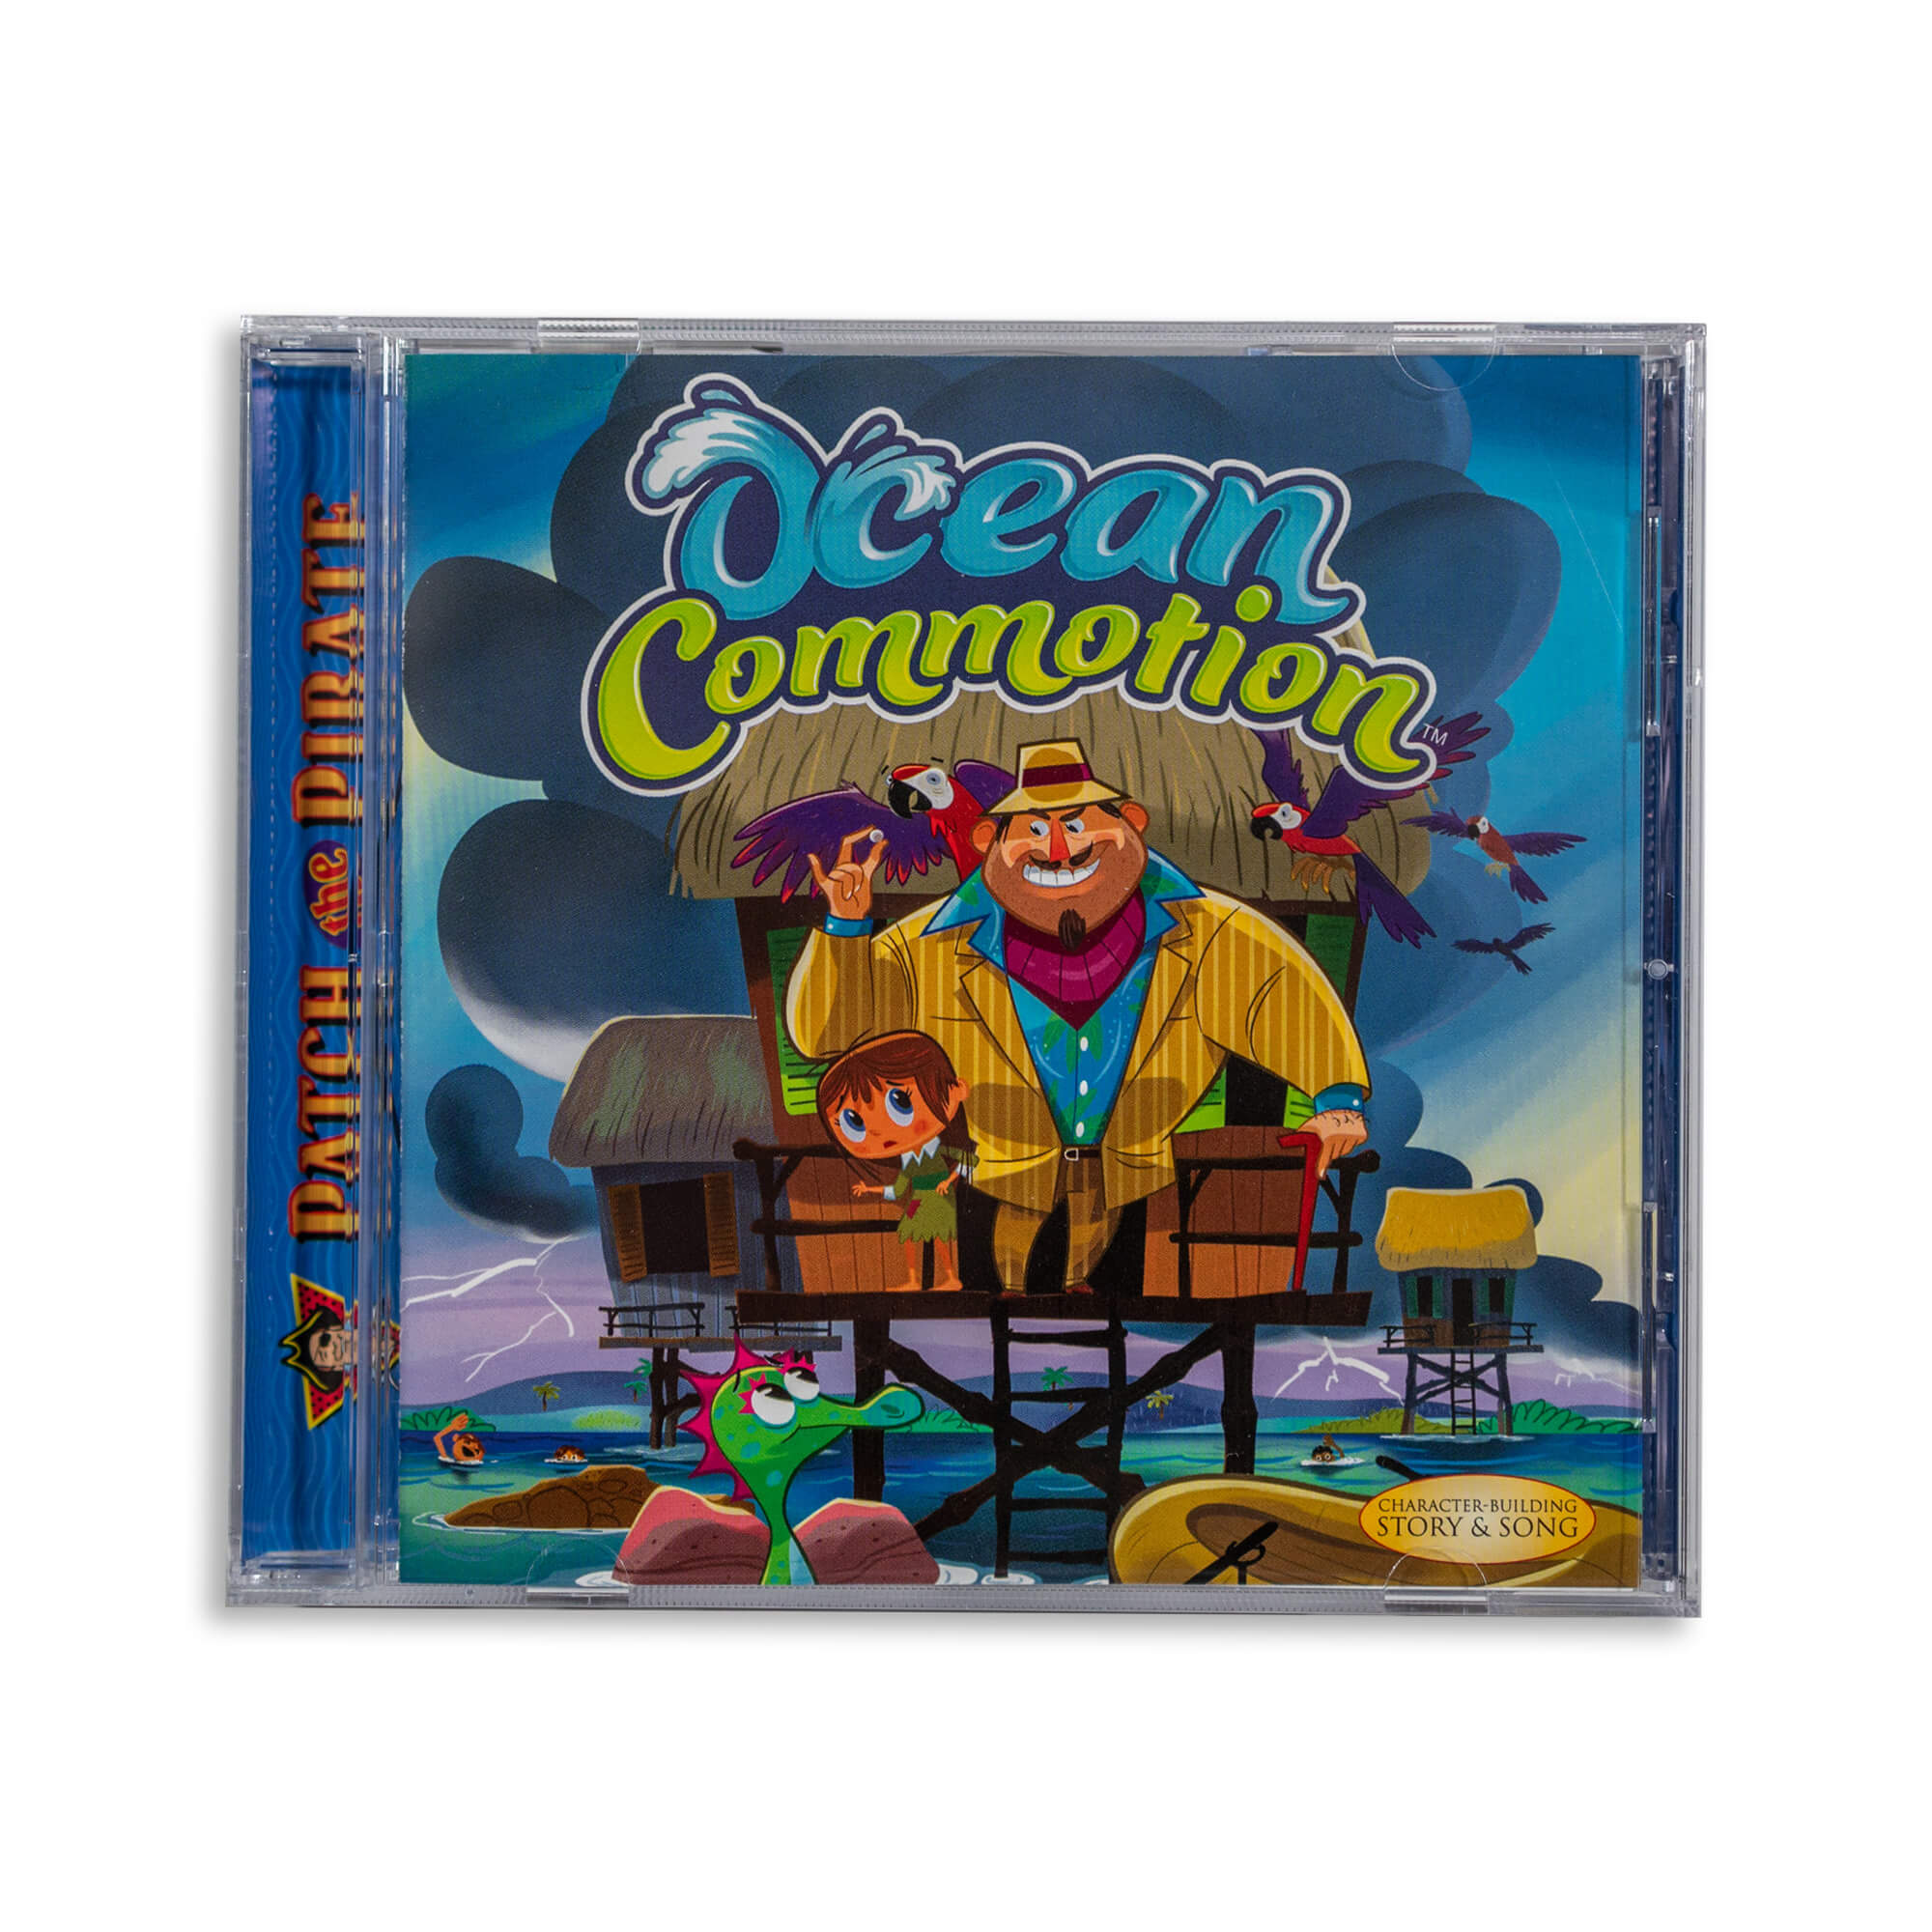 Ocean Commotion Musical Drama CD